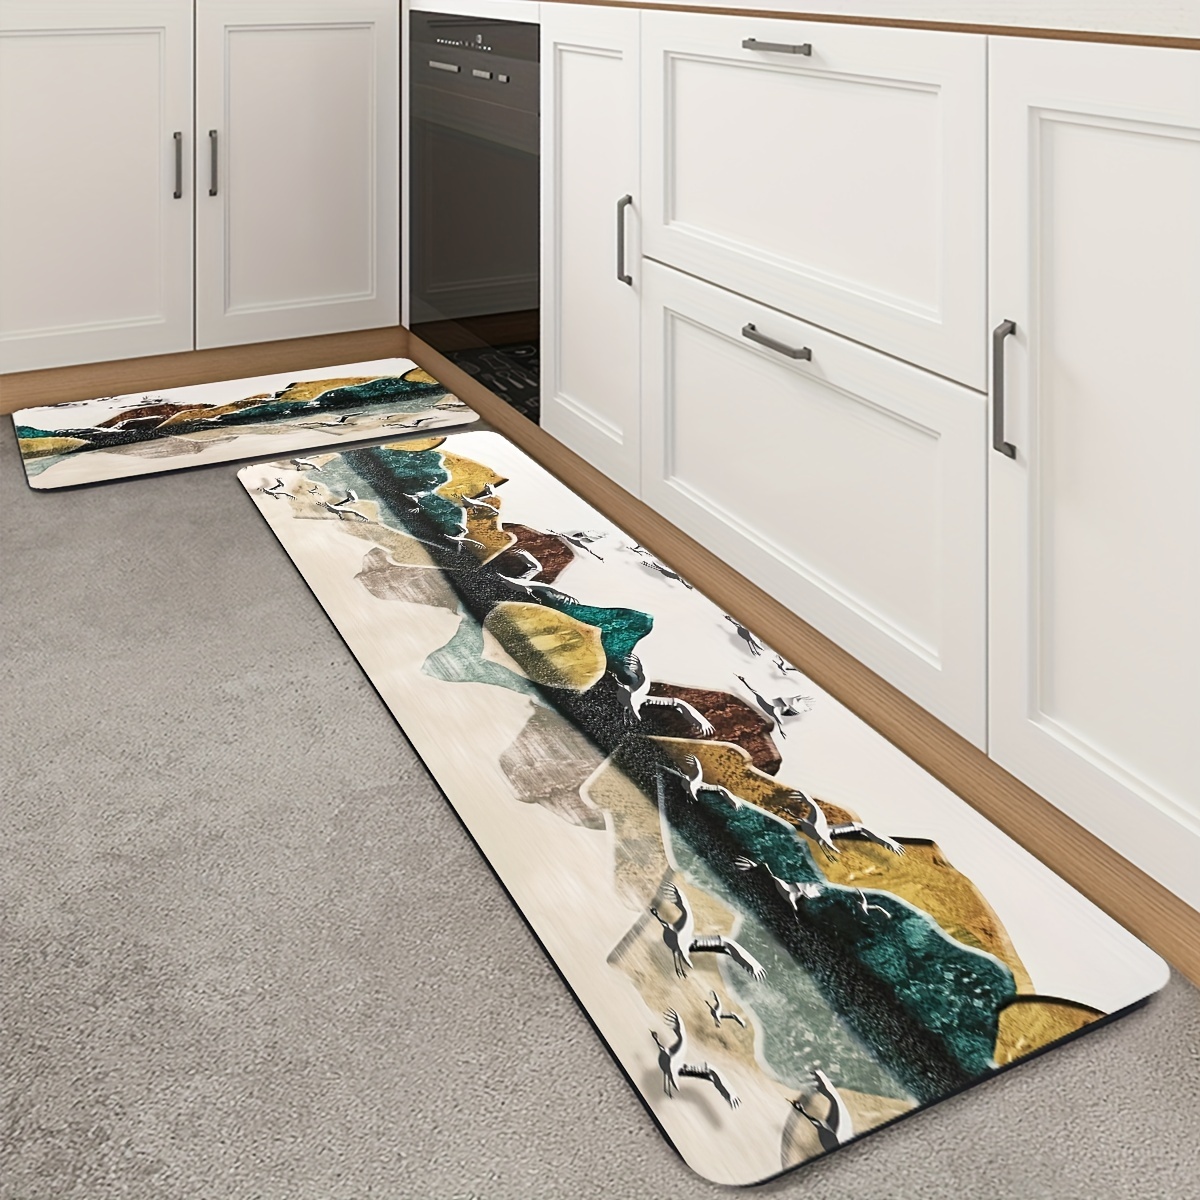 Super Absorbent Kitchen Mat Non-slip Kitchen Rug Quick Drying Bathroom  Floor Mat Entrance Doormat Rubber